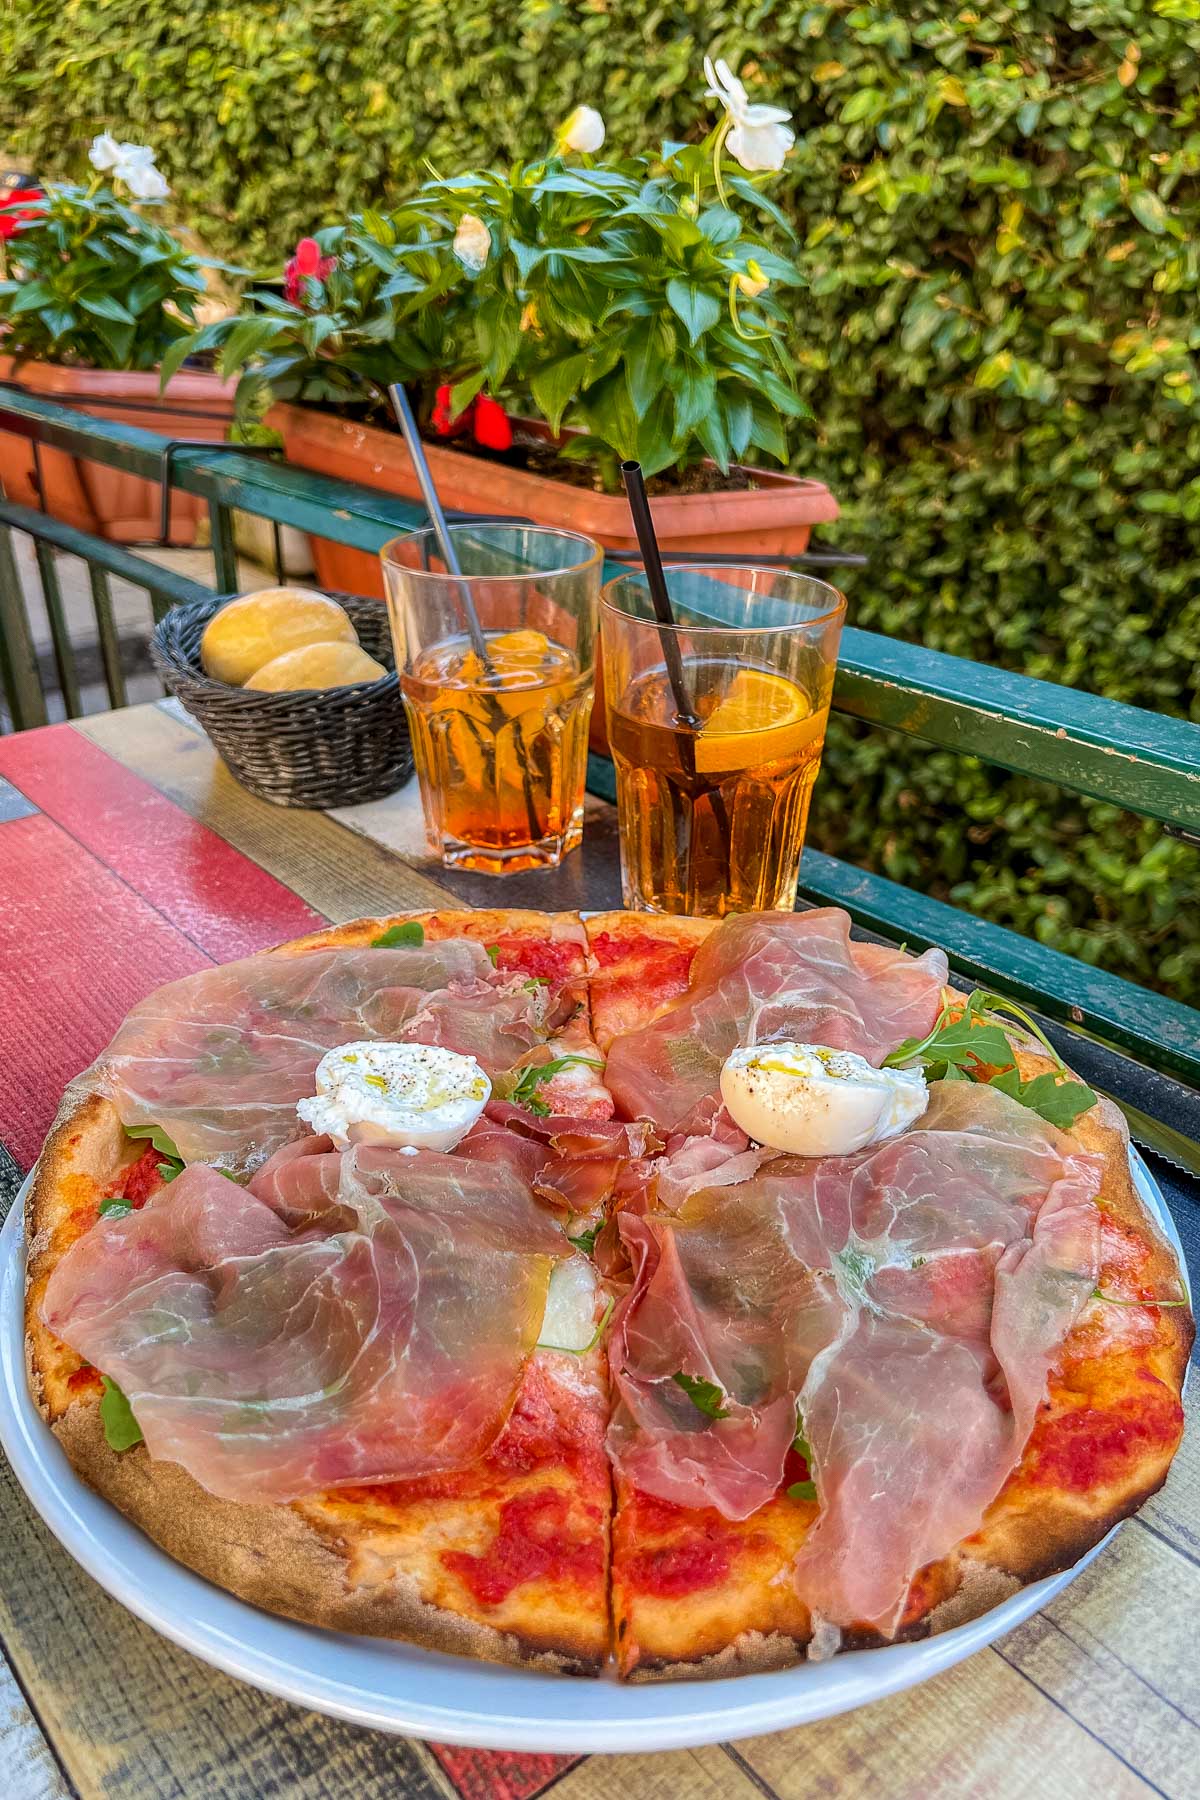 Pizza for dinner at Bistrot Antichi Sapori, Bellagio